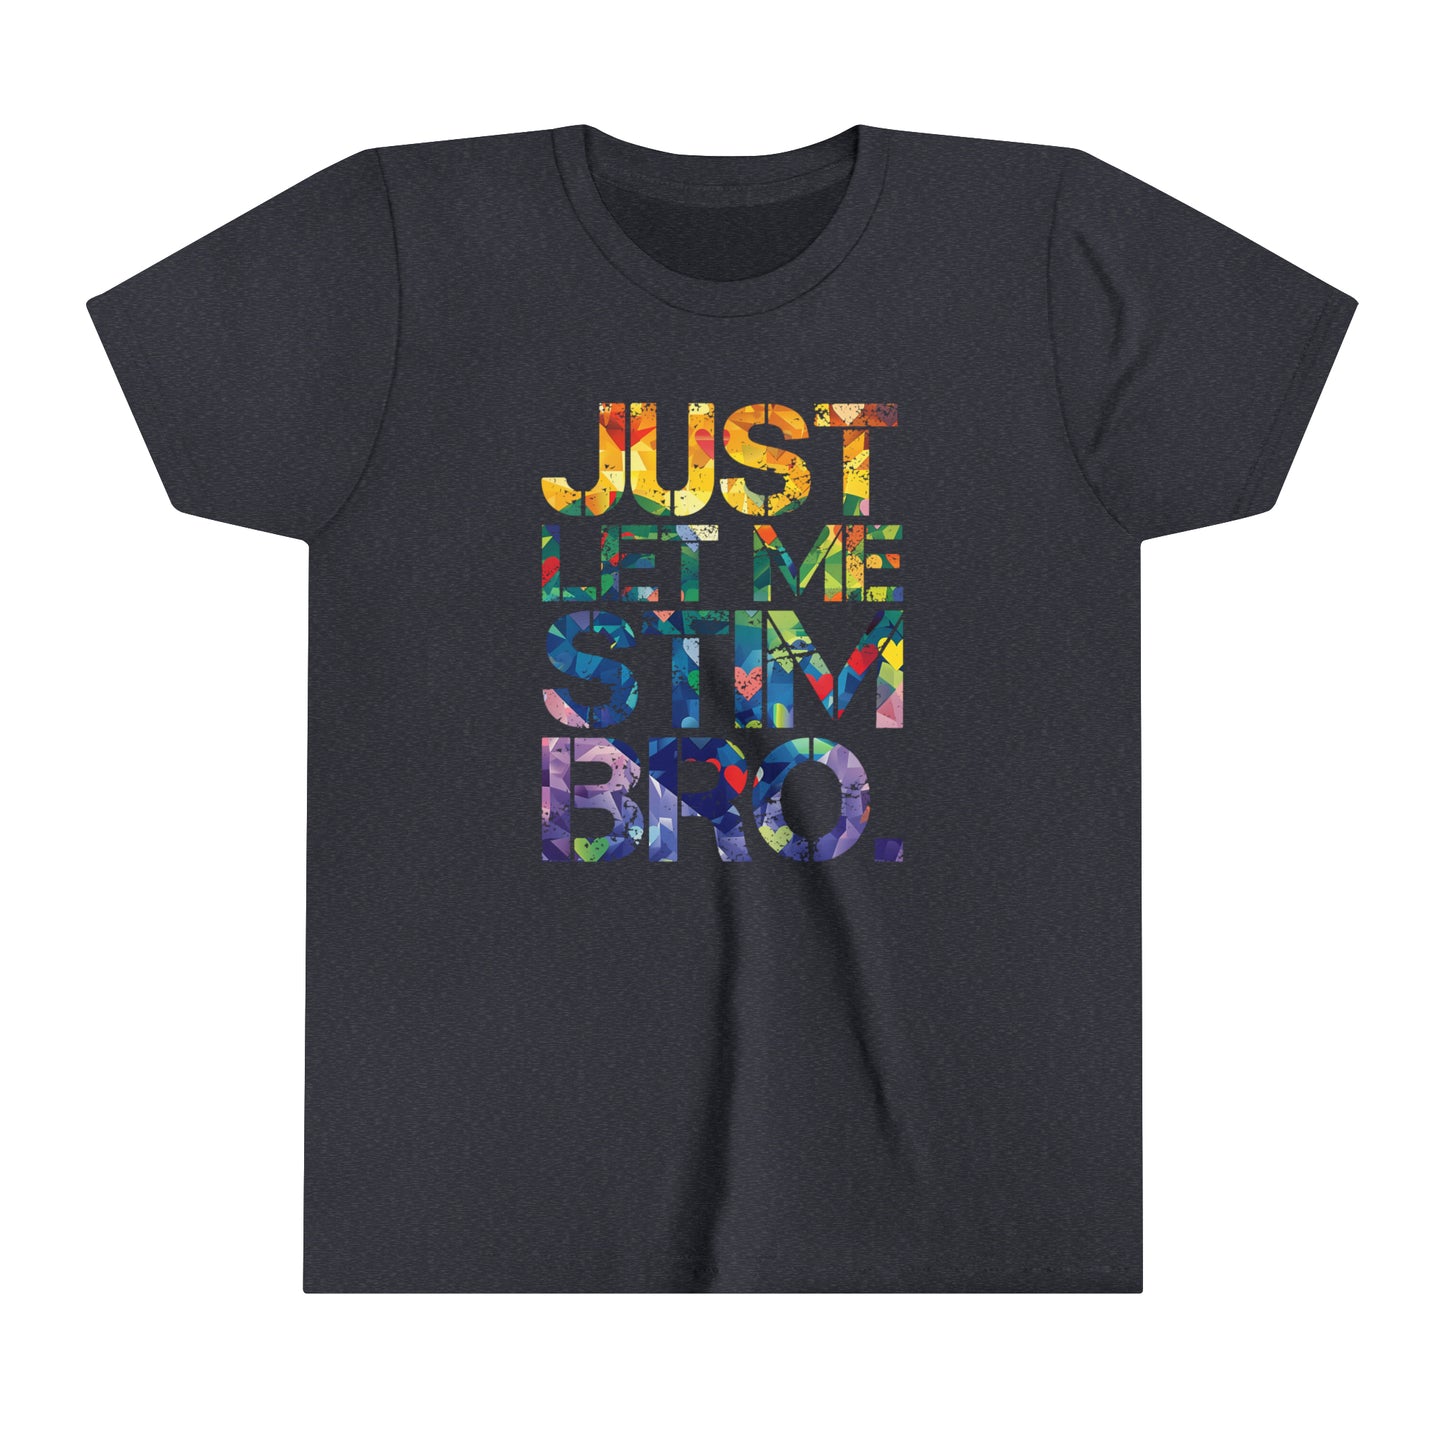 Just Let Me Stim Bro Autism Awareness Advocate Youth Shirt